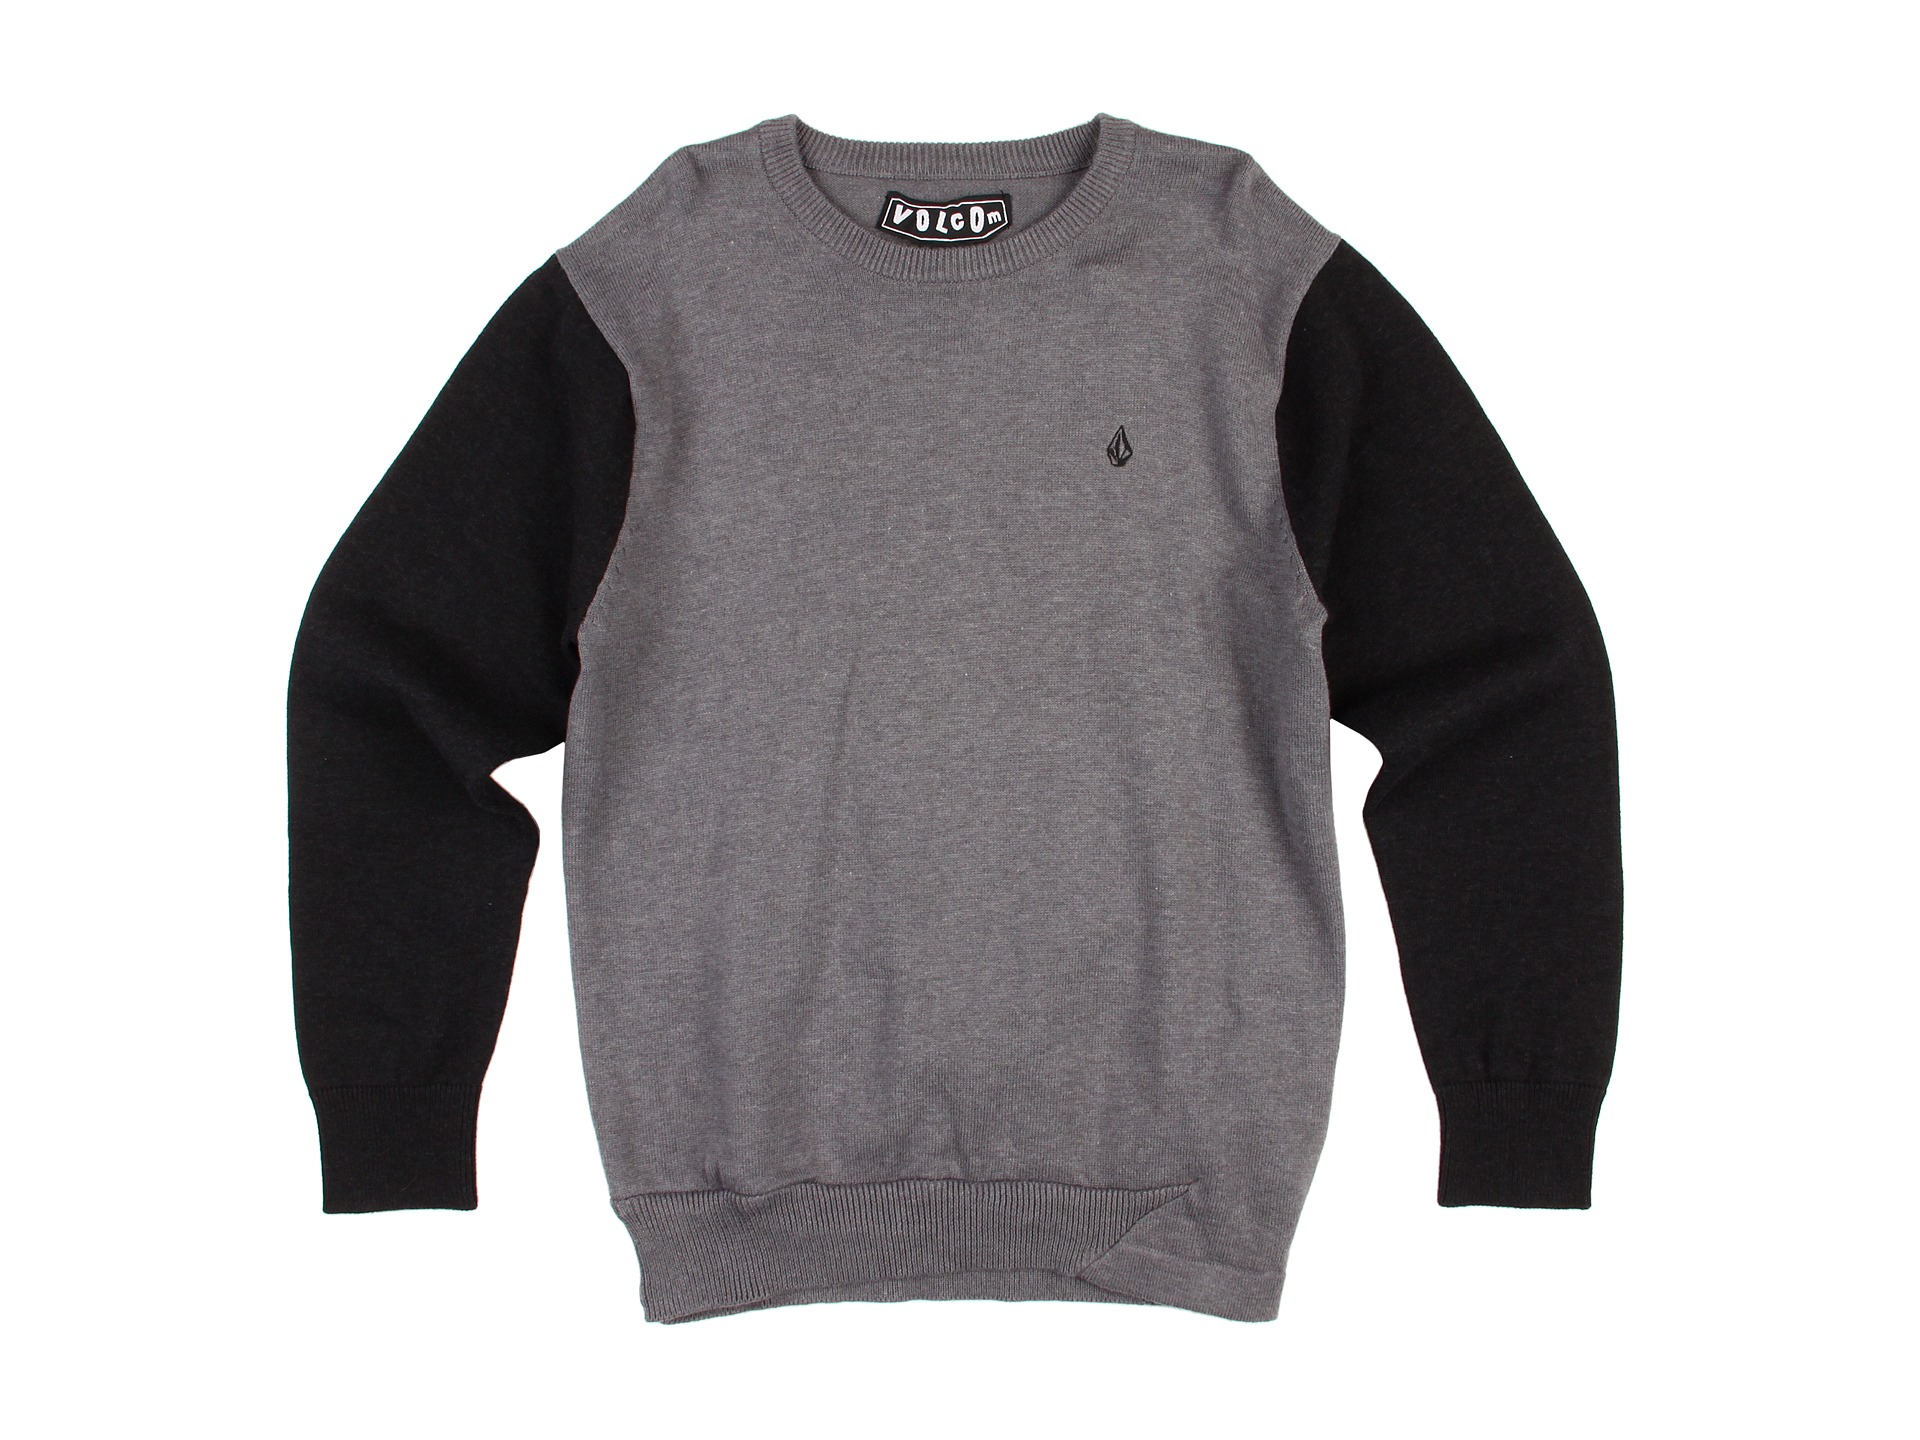 Volcom Kids Othercircle Sweater (Toddler/Little Kids) $45.00